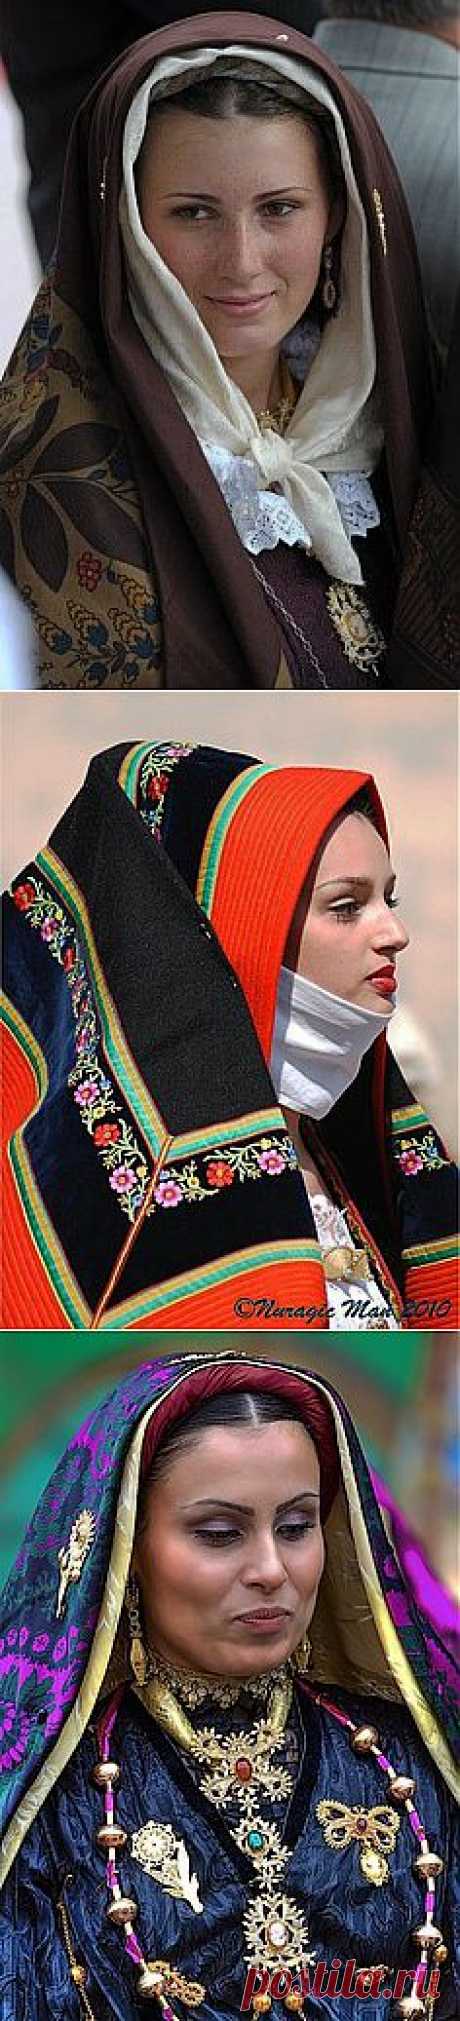 Traditional Sardinian costume | Windows to the Soul